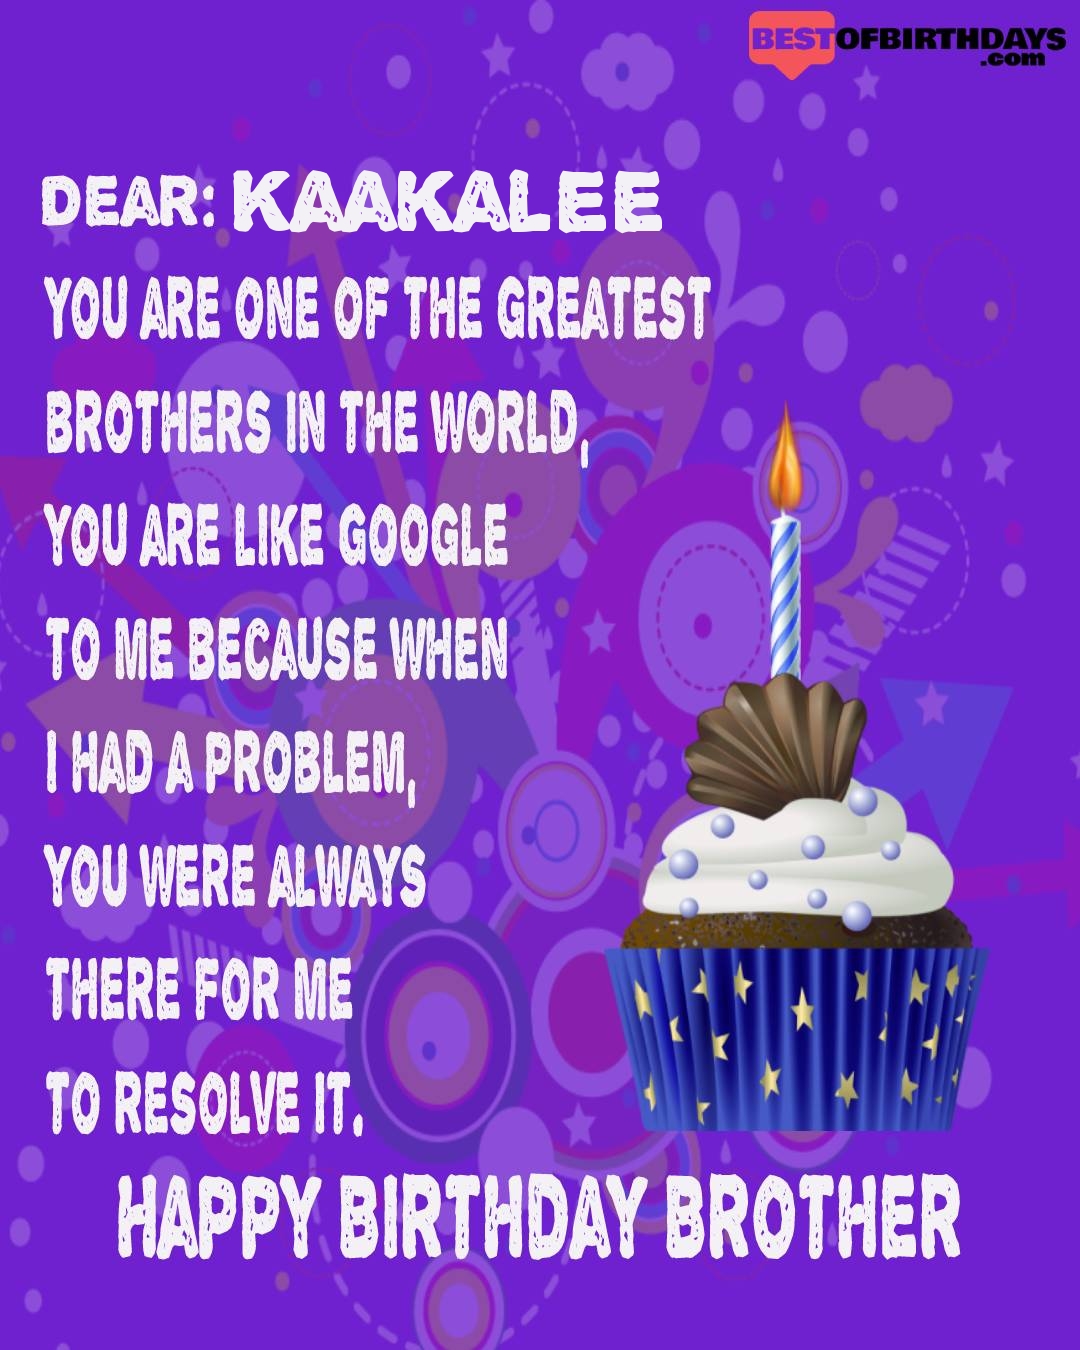 Happy birthday kaakalee bhai brother bro